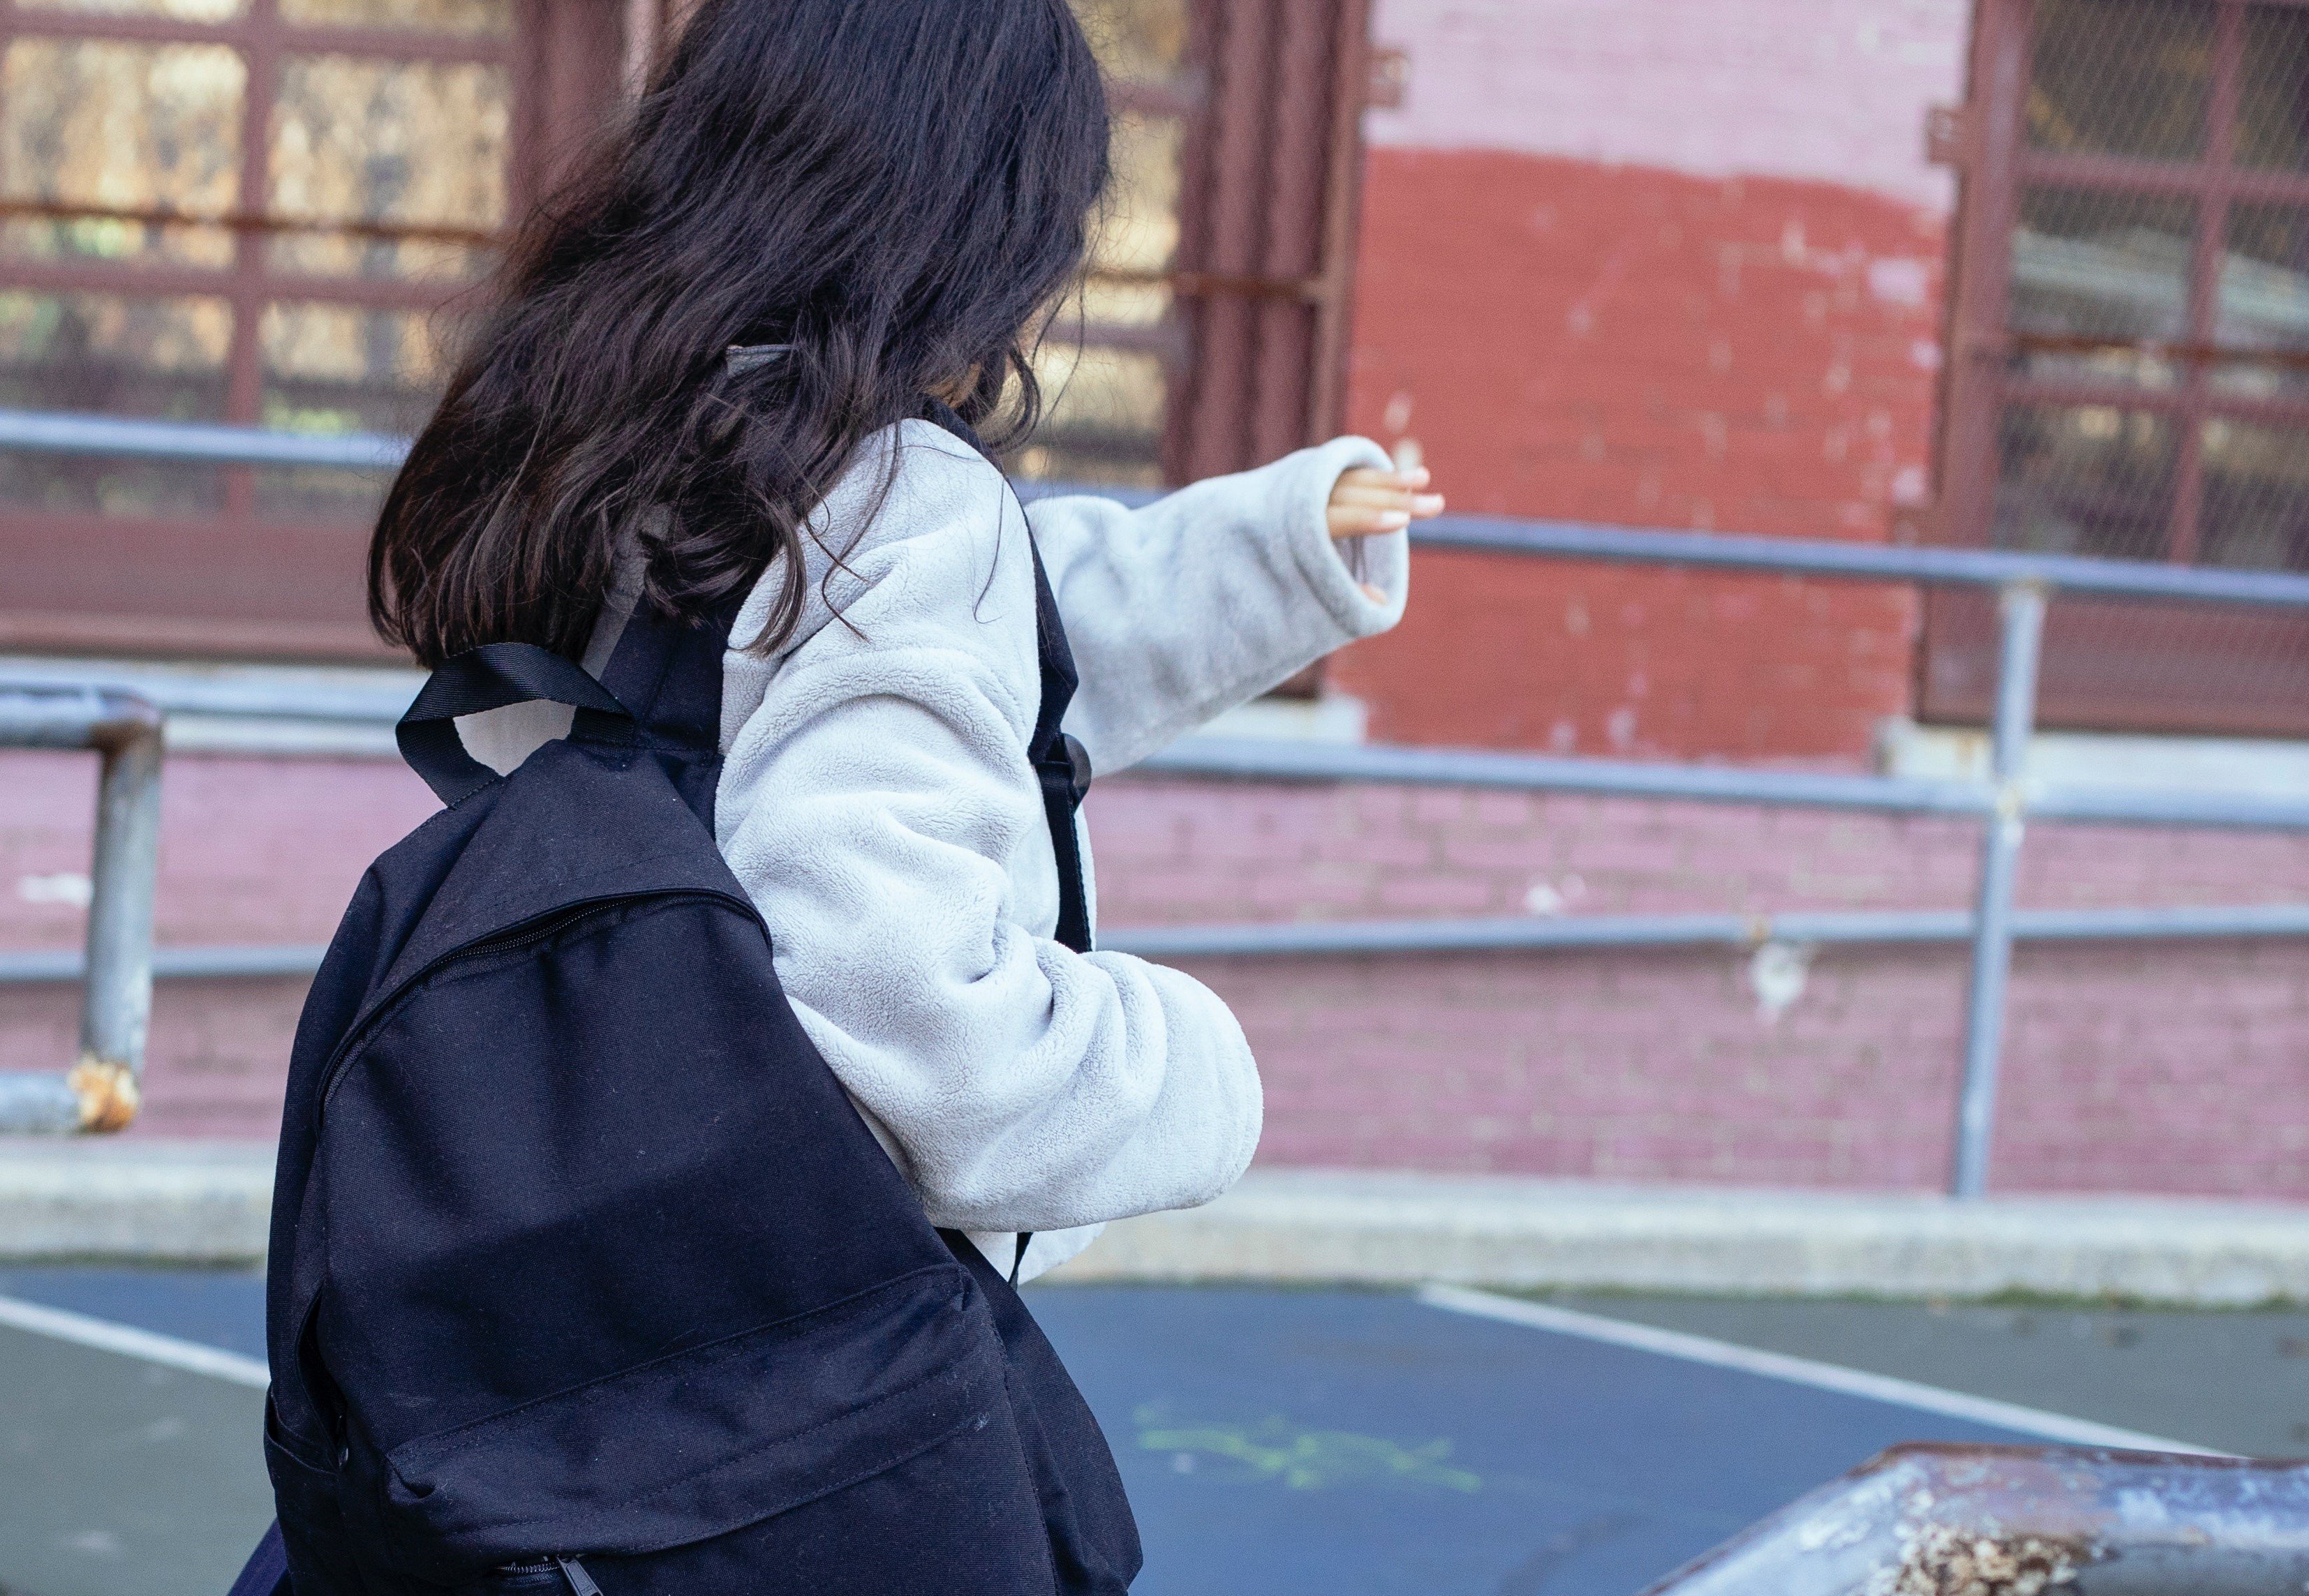 Schoolgirl carrying a backpack. | Source: Pexels